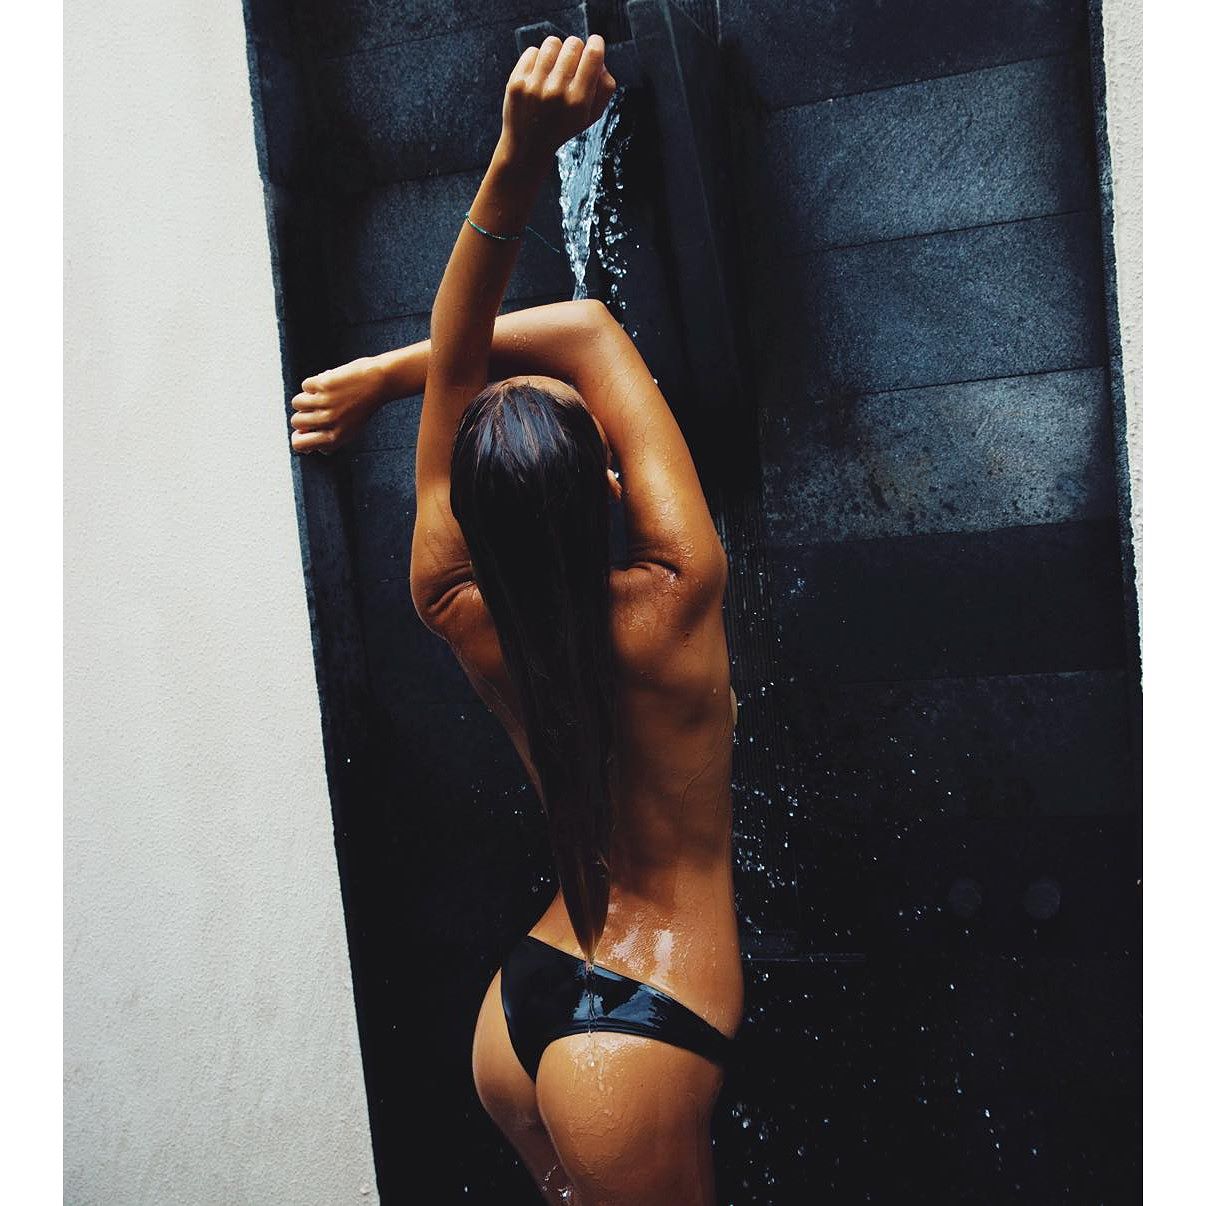 Alexis Ren Bikini Pictures (41 pics)